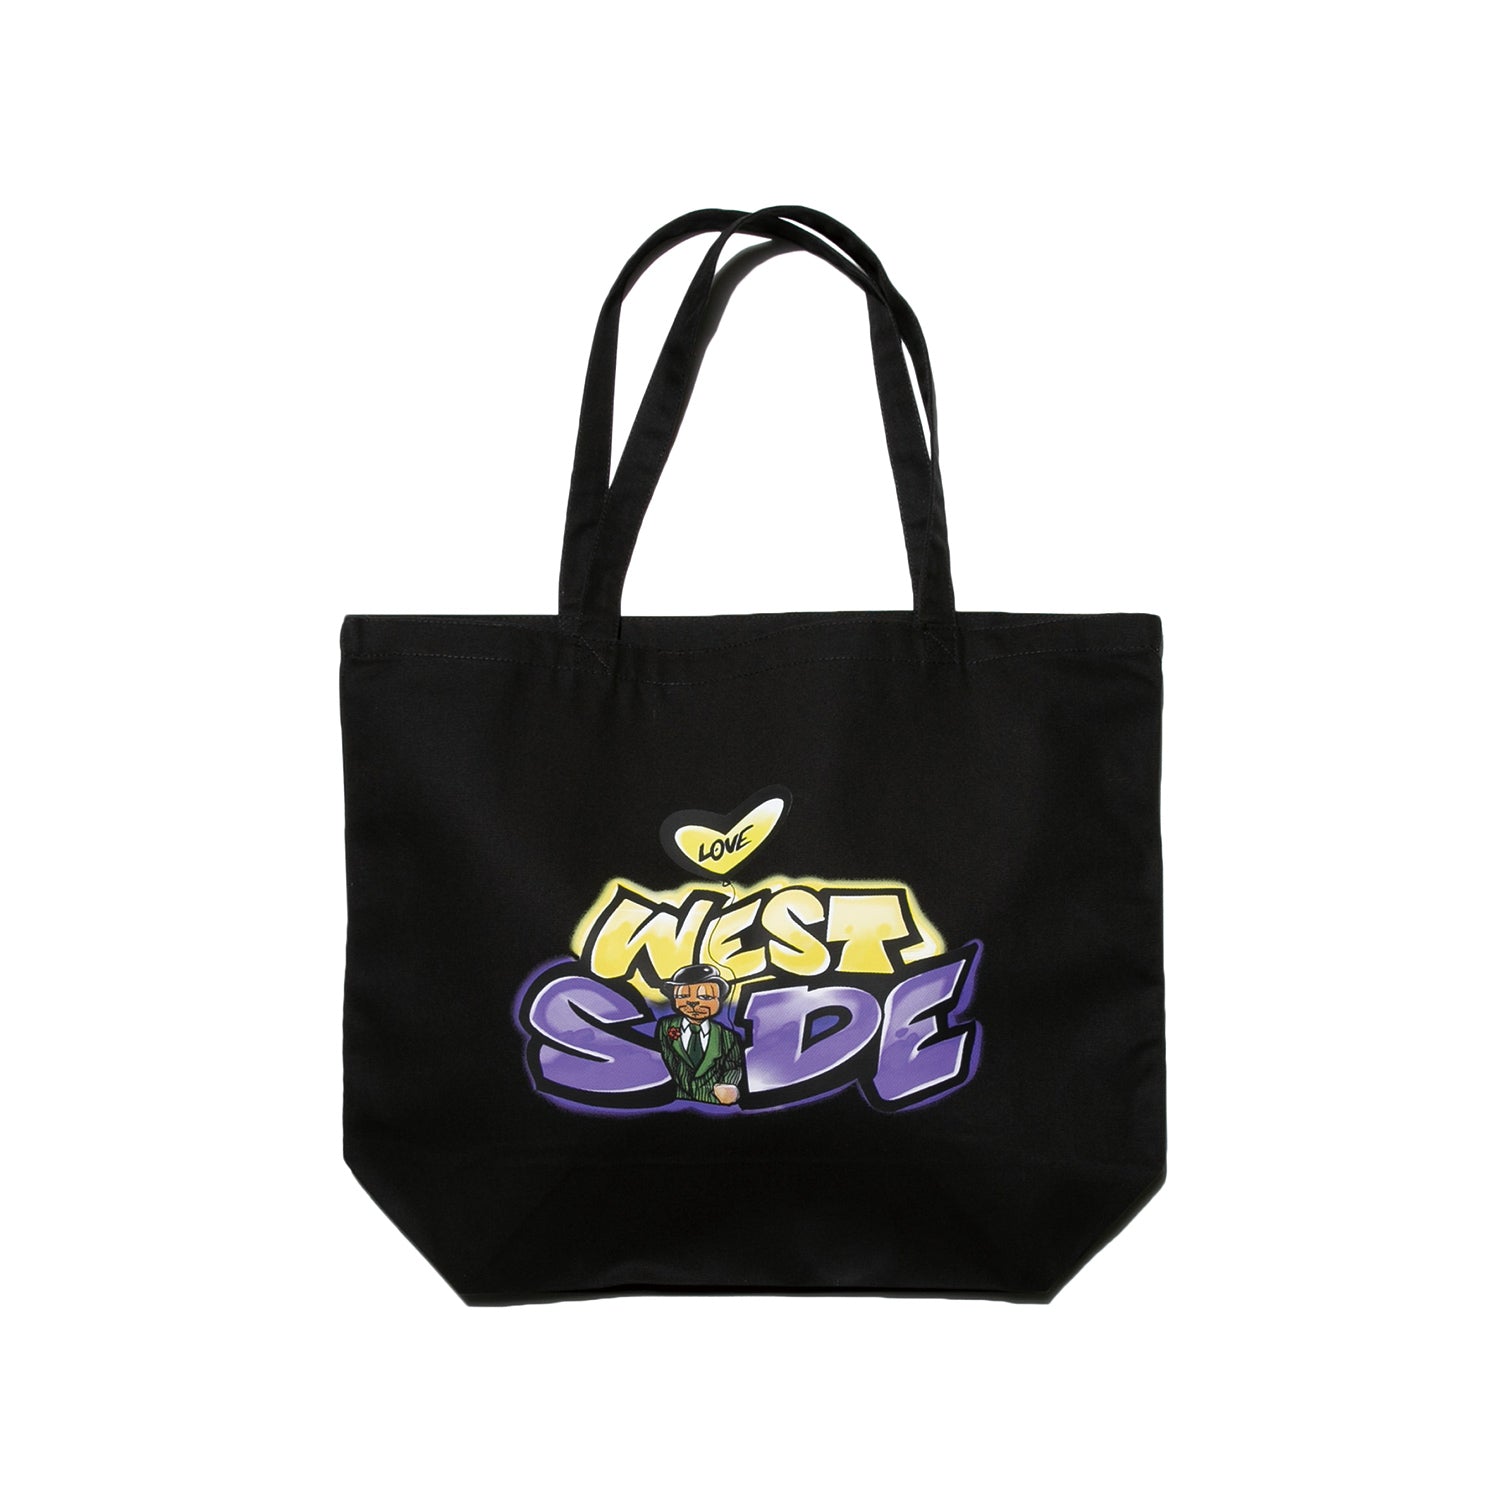 Nate Dogg Tote Bag by Riskie-Black